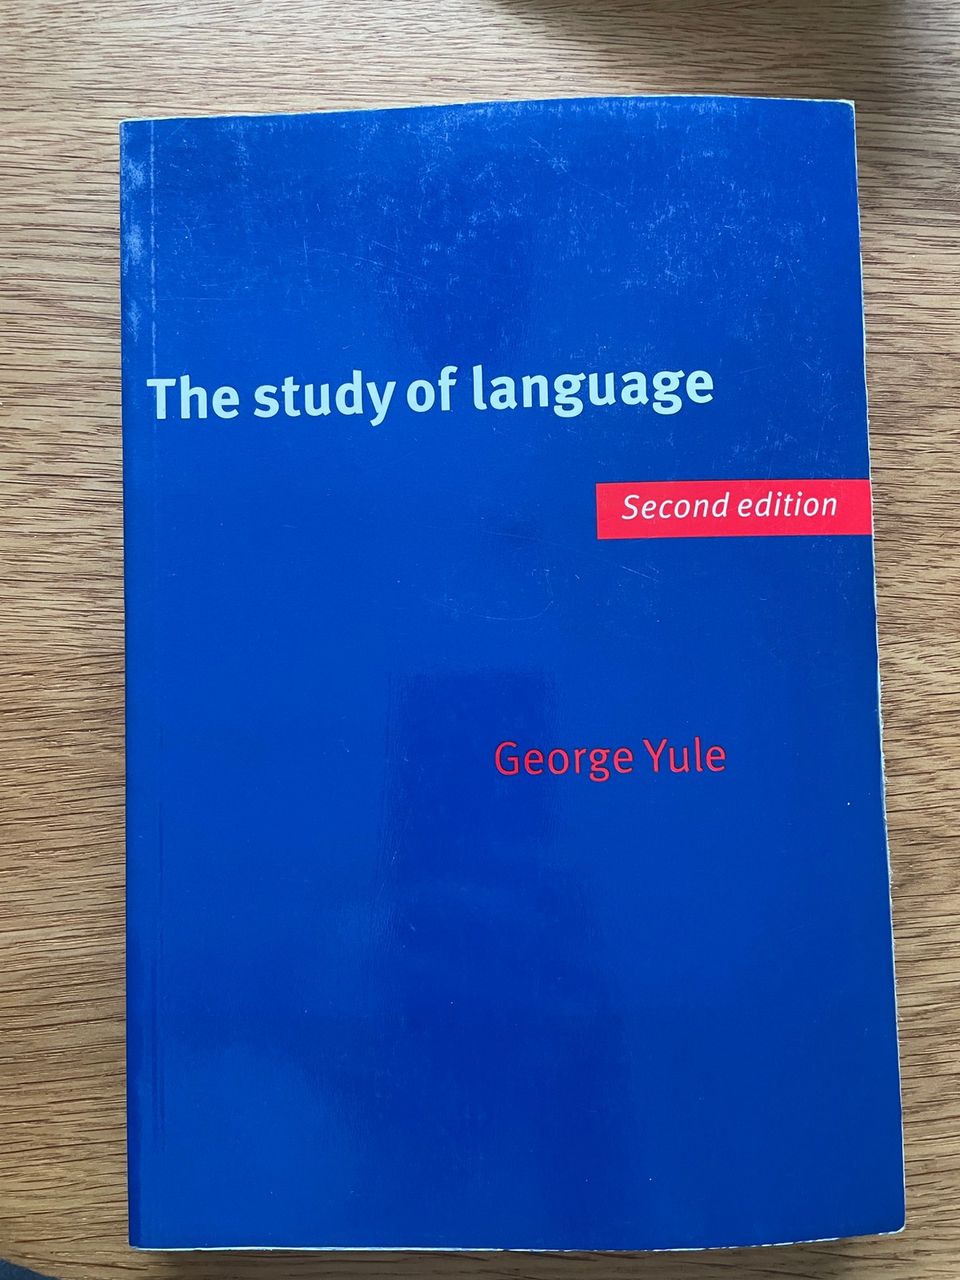 The study of language, Yule